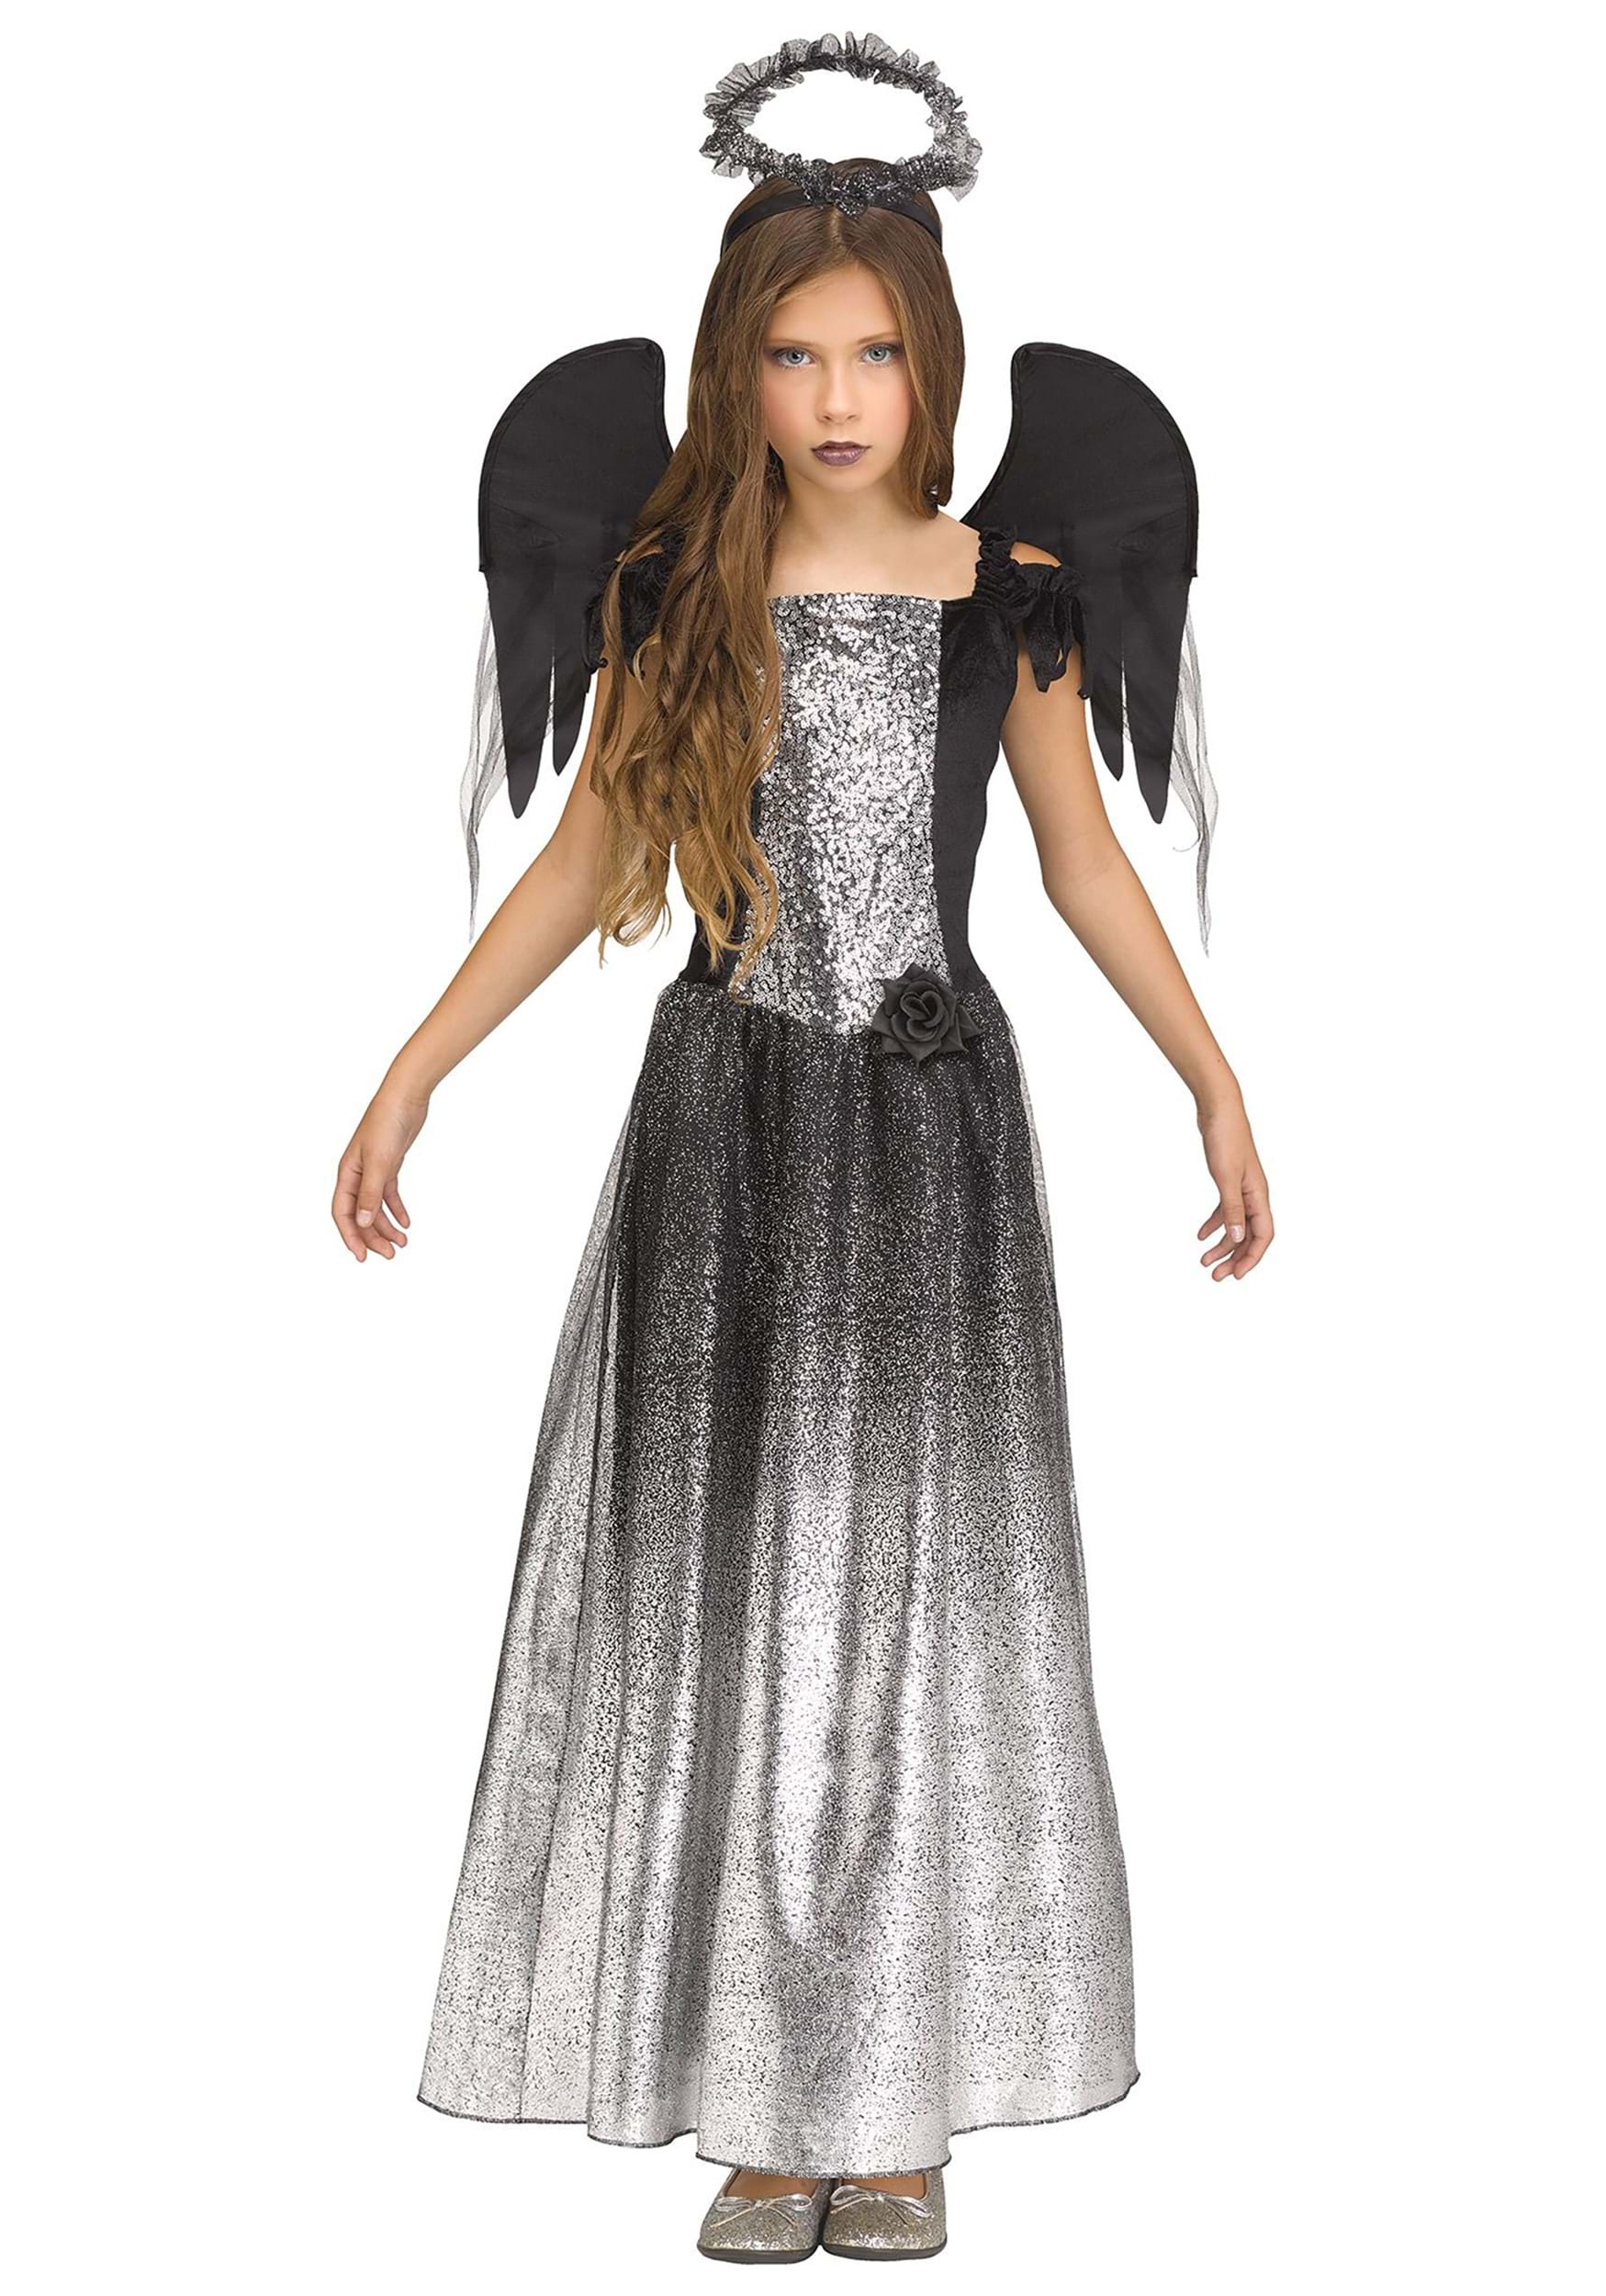 Onyx Angel Girls Costume